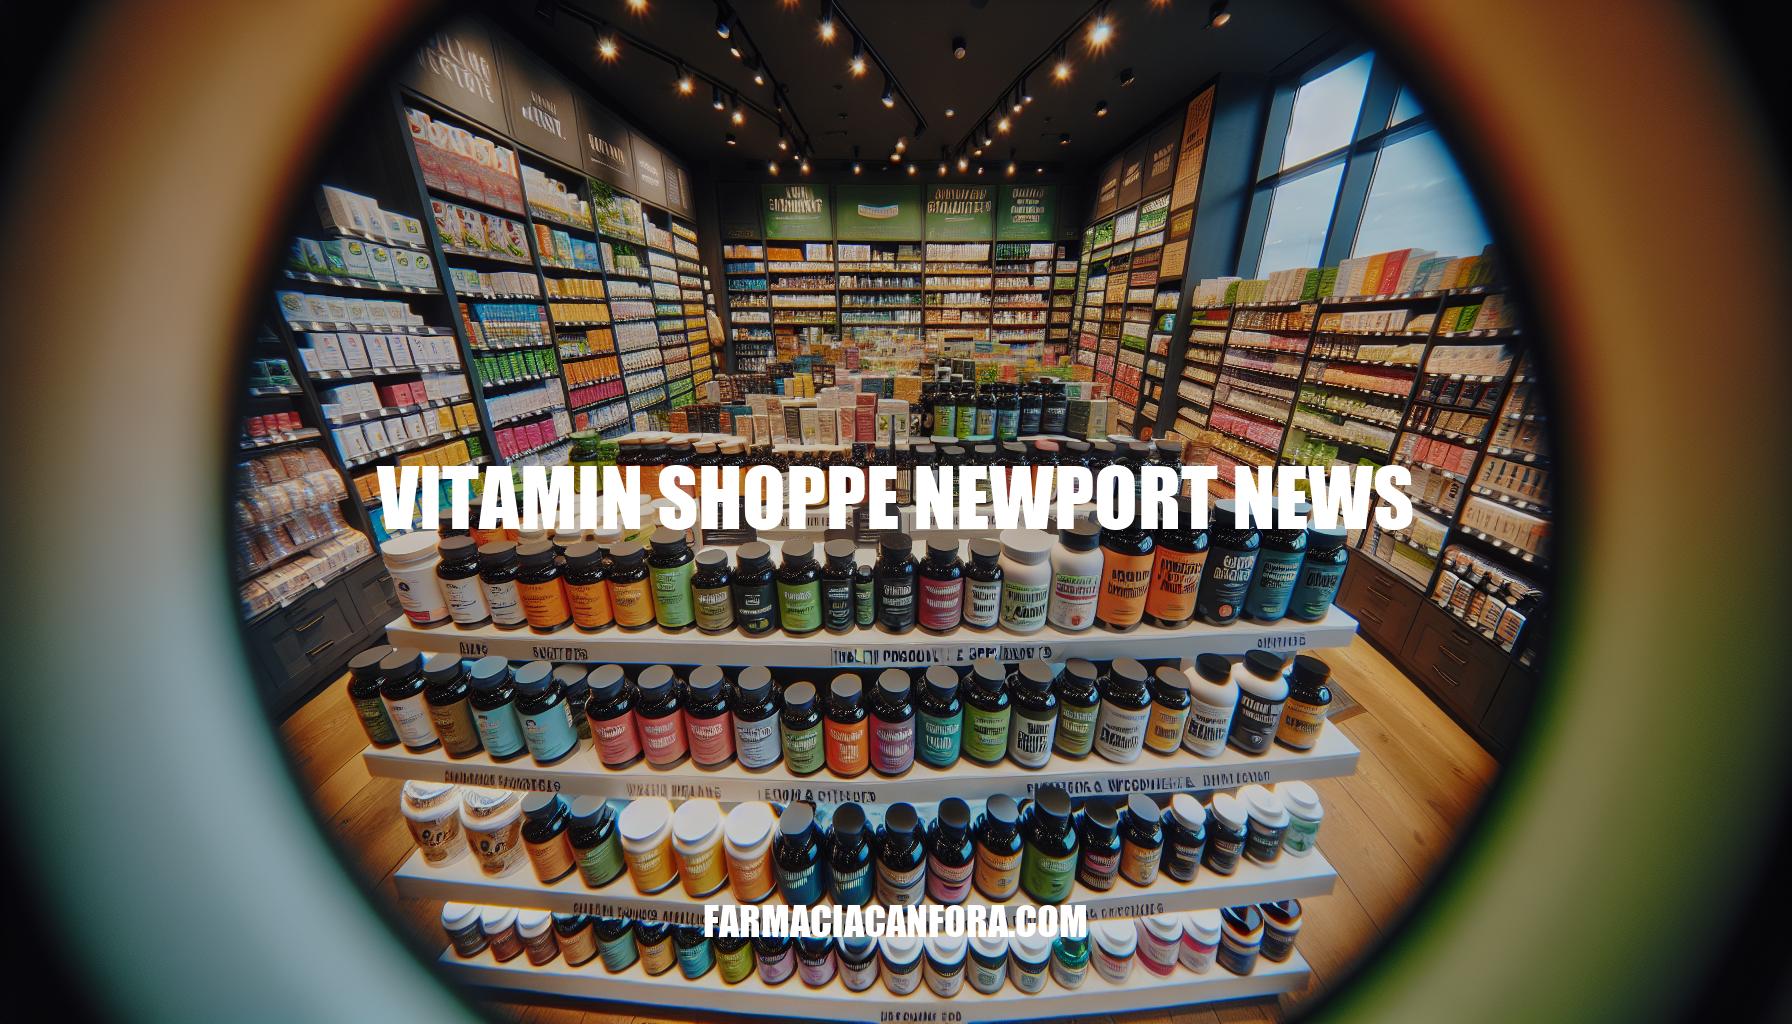 Explore Health and Wellness at Vitamin Shoppe Newport News